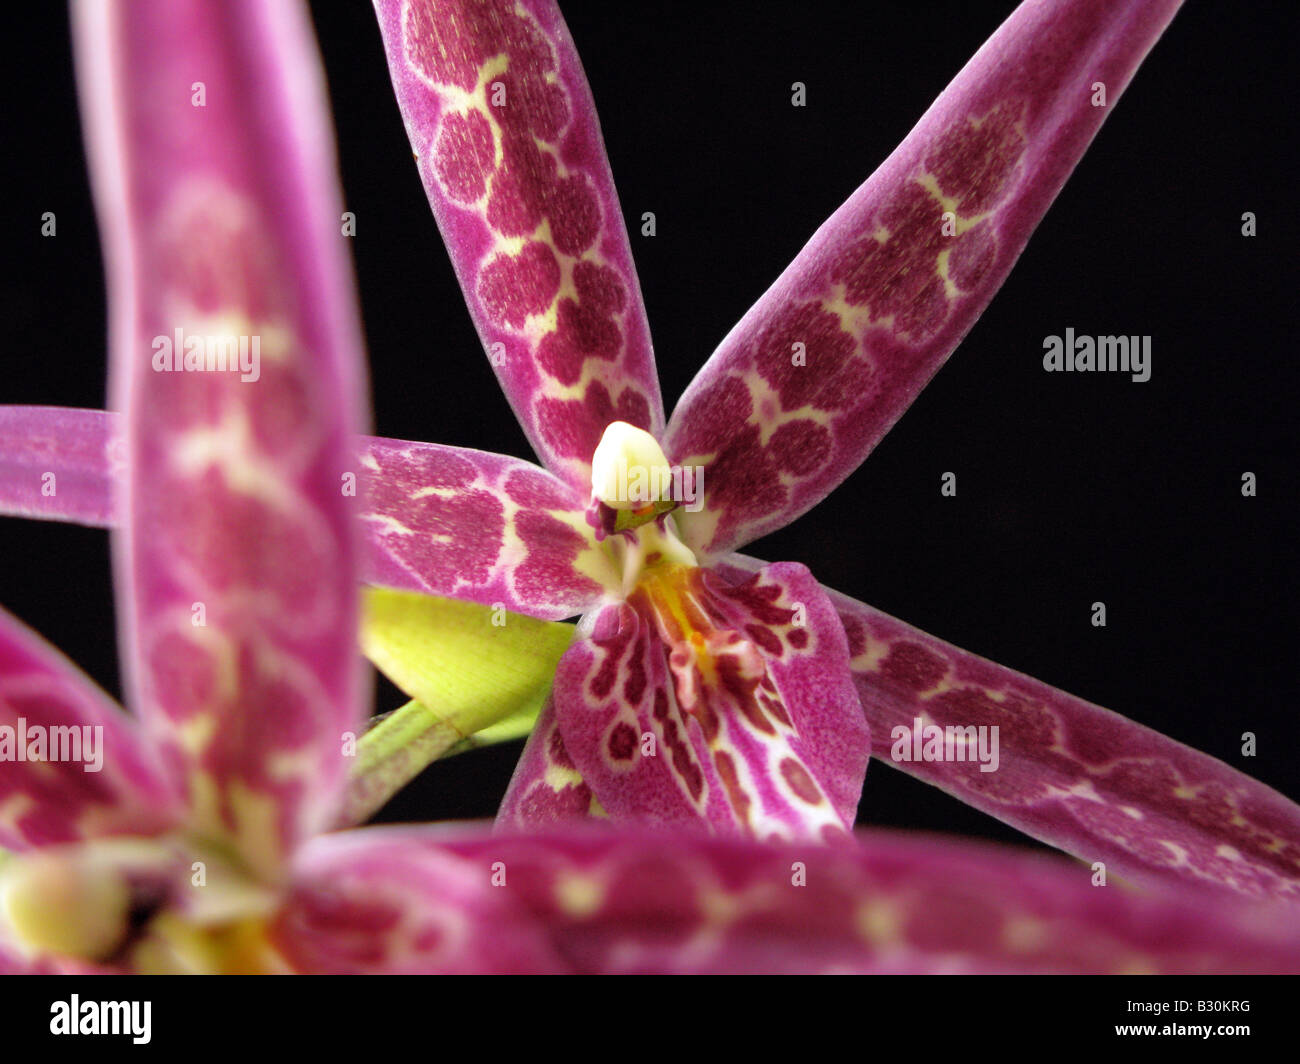 Miltassia almuck cario. Spider orchid. Brassia hibrid close up Stock Photo